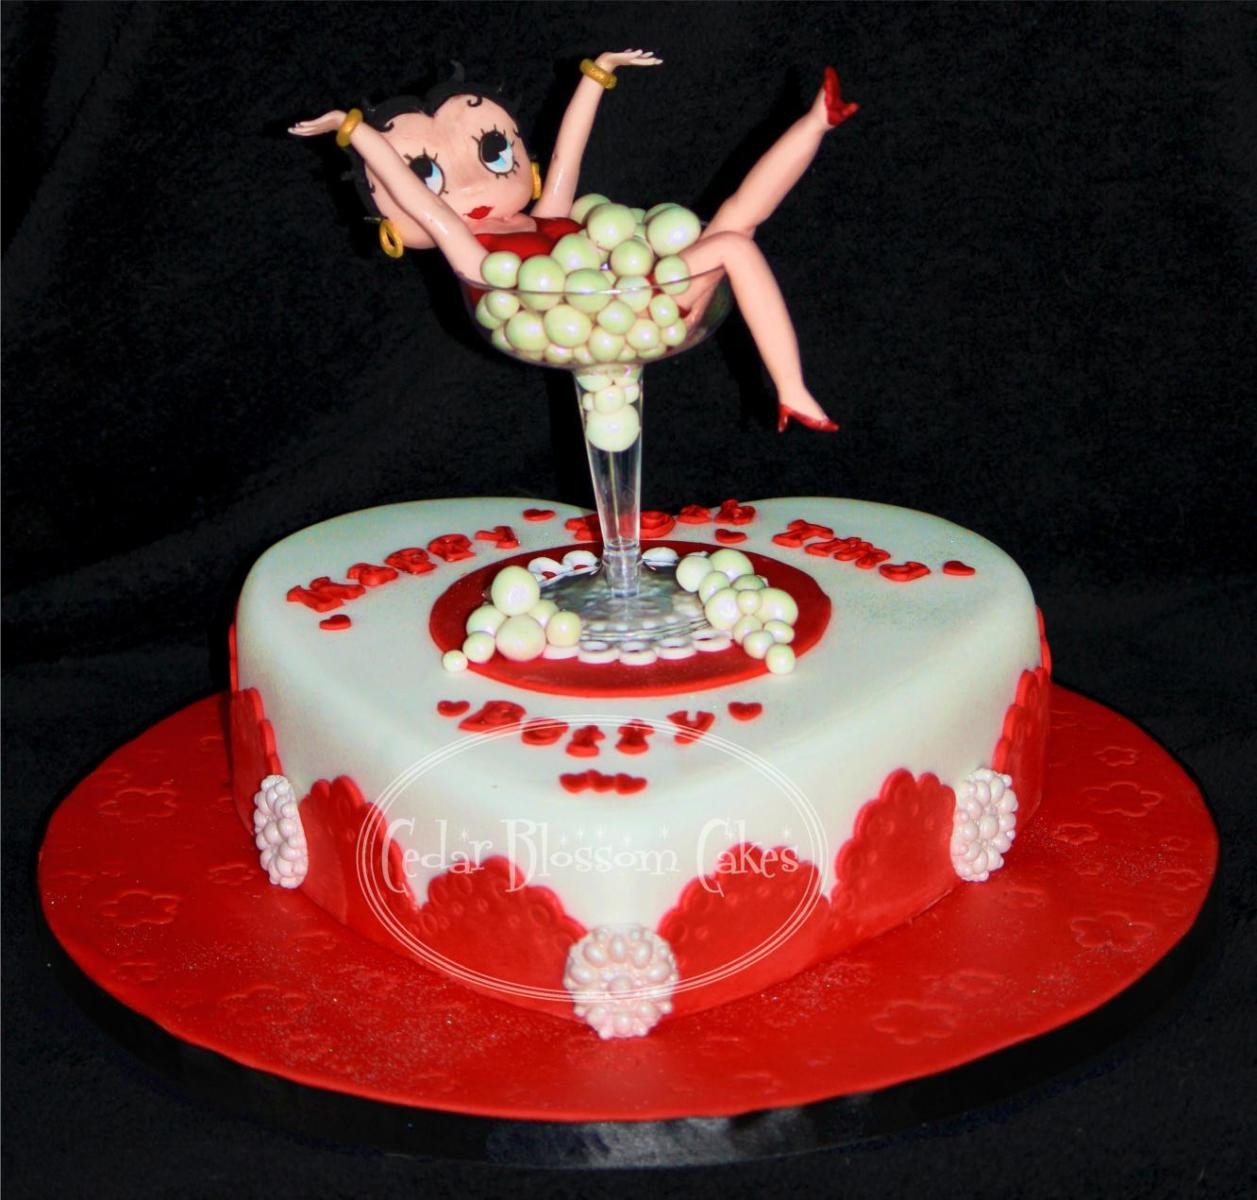 Betty Boop Birthday Cakes
 Betty Boop Cake Decorating munity Cakes We Bake